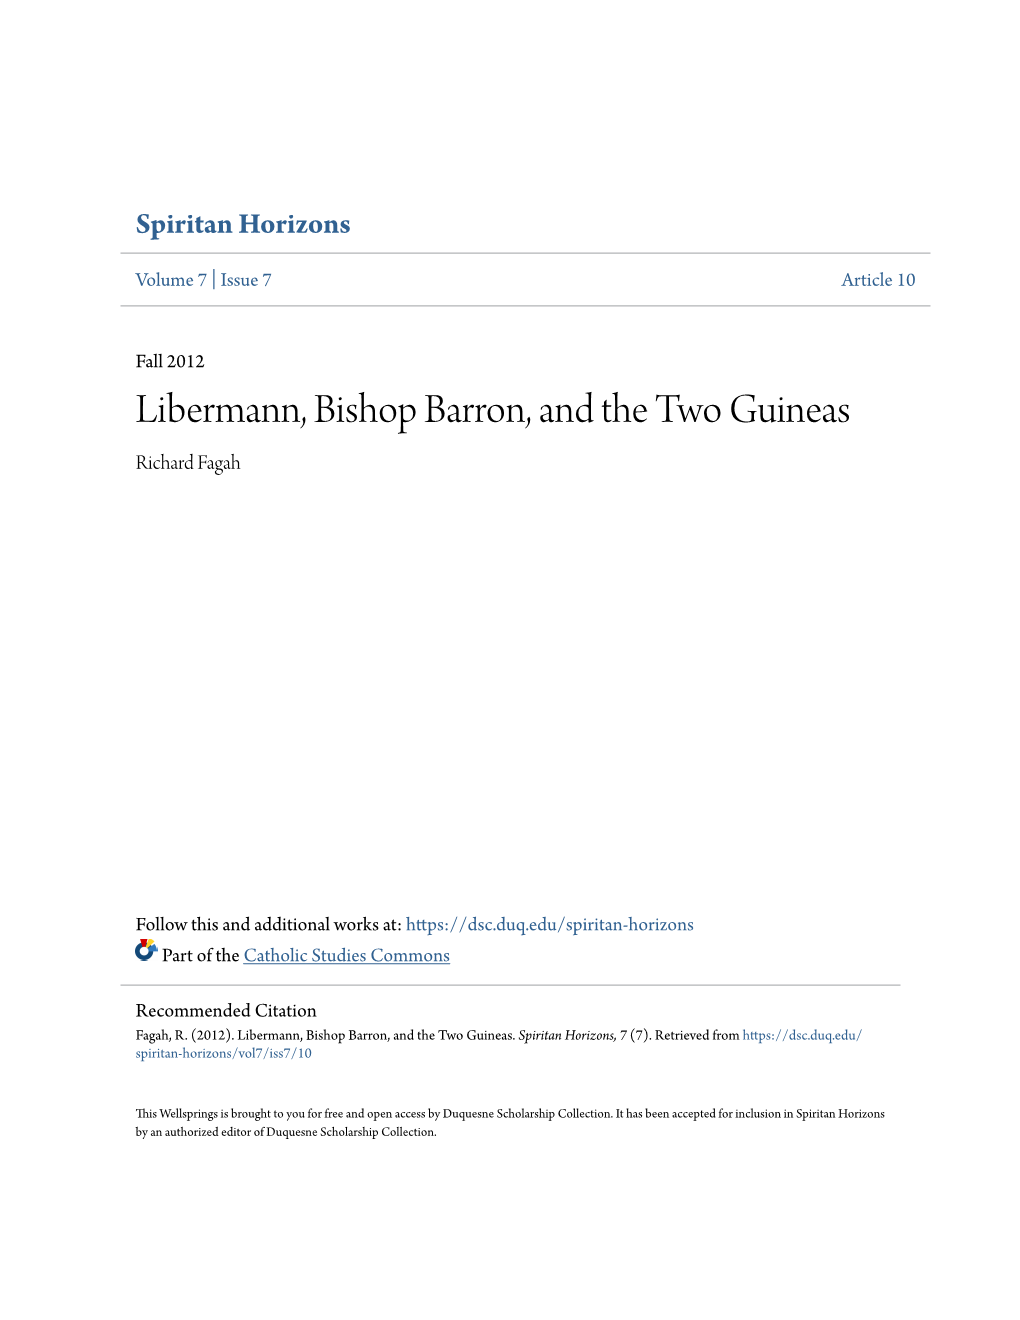 Libermann, Bishop Barron, and the Two Guineas Richard Fagah